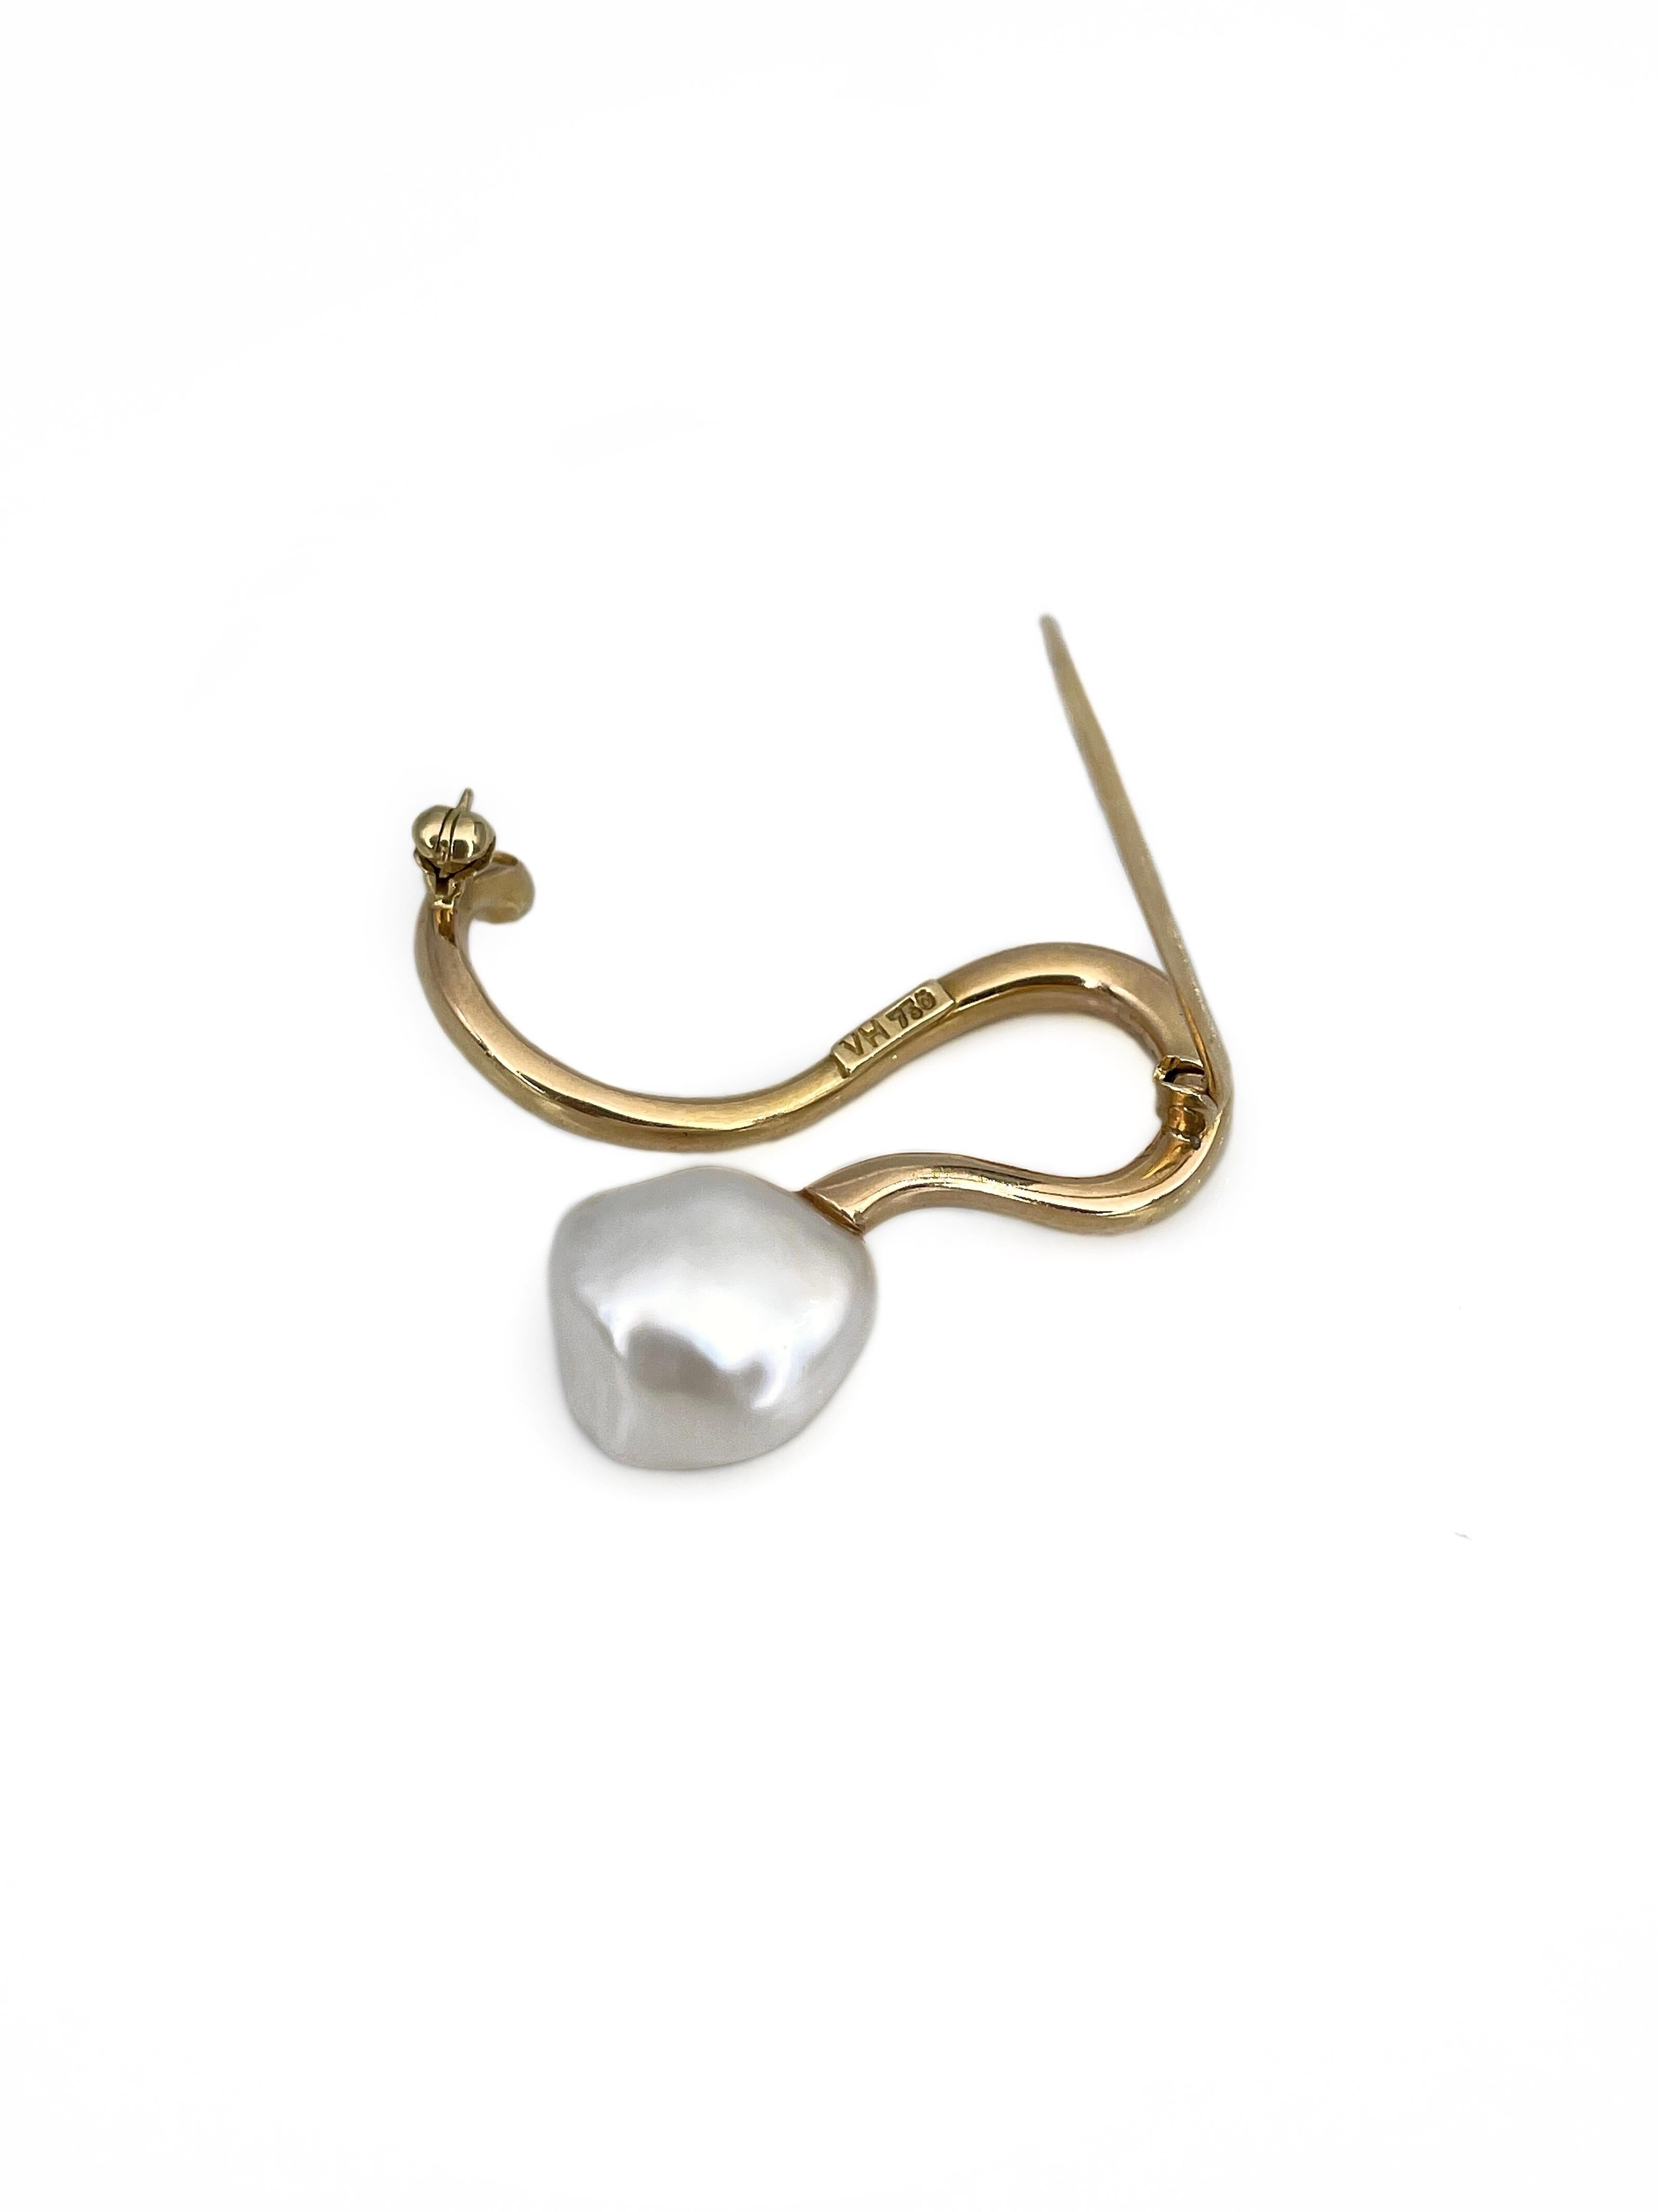 Modern Vintage 18 Karat Gold Pearl Diamond Curved Pin Brooch